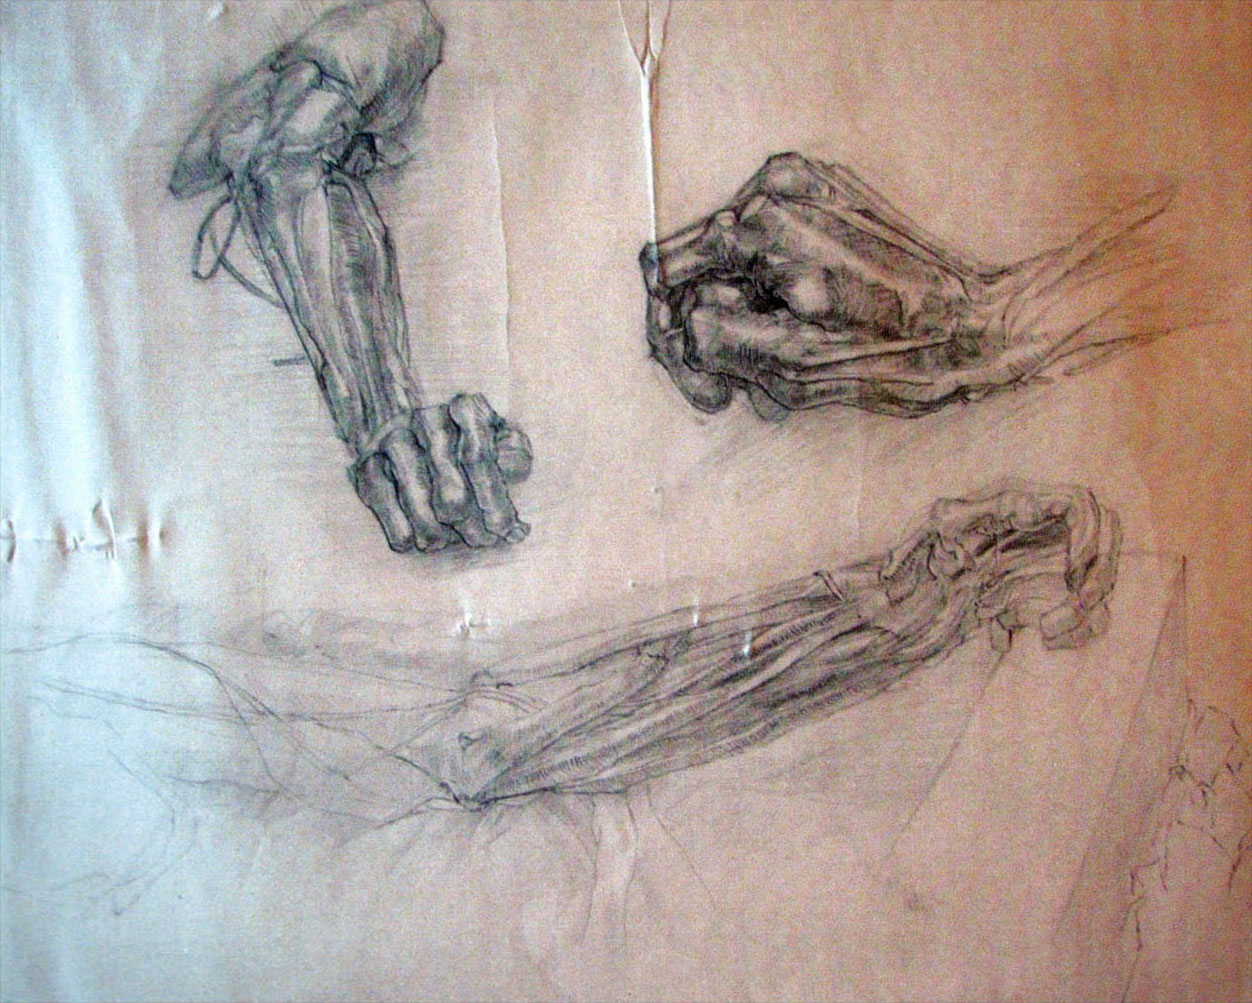 Anatomical Arm and Hand Study - Joseph Swanek Artist